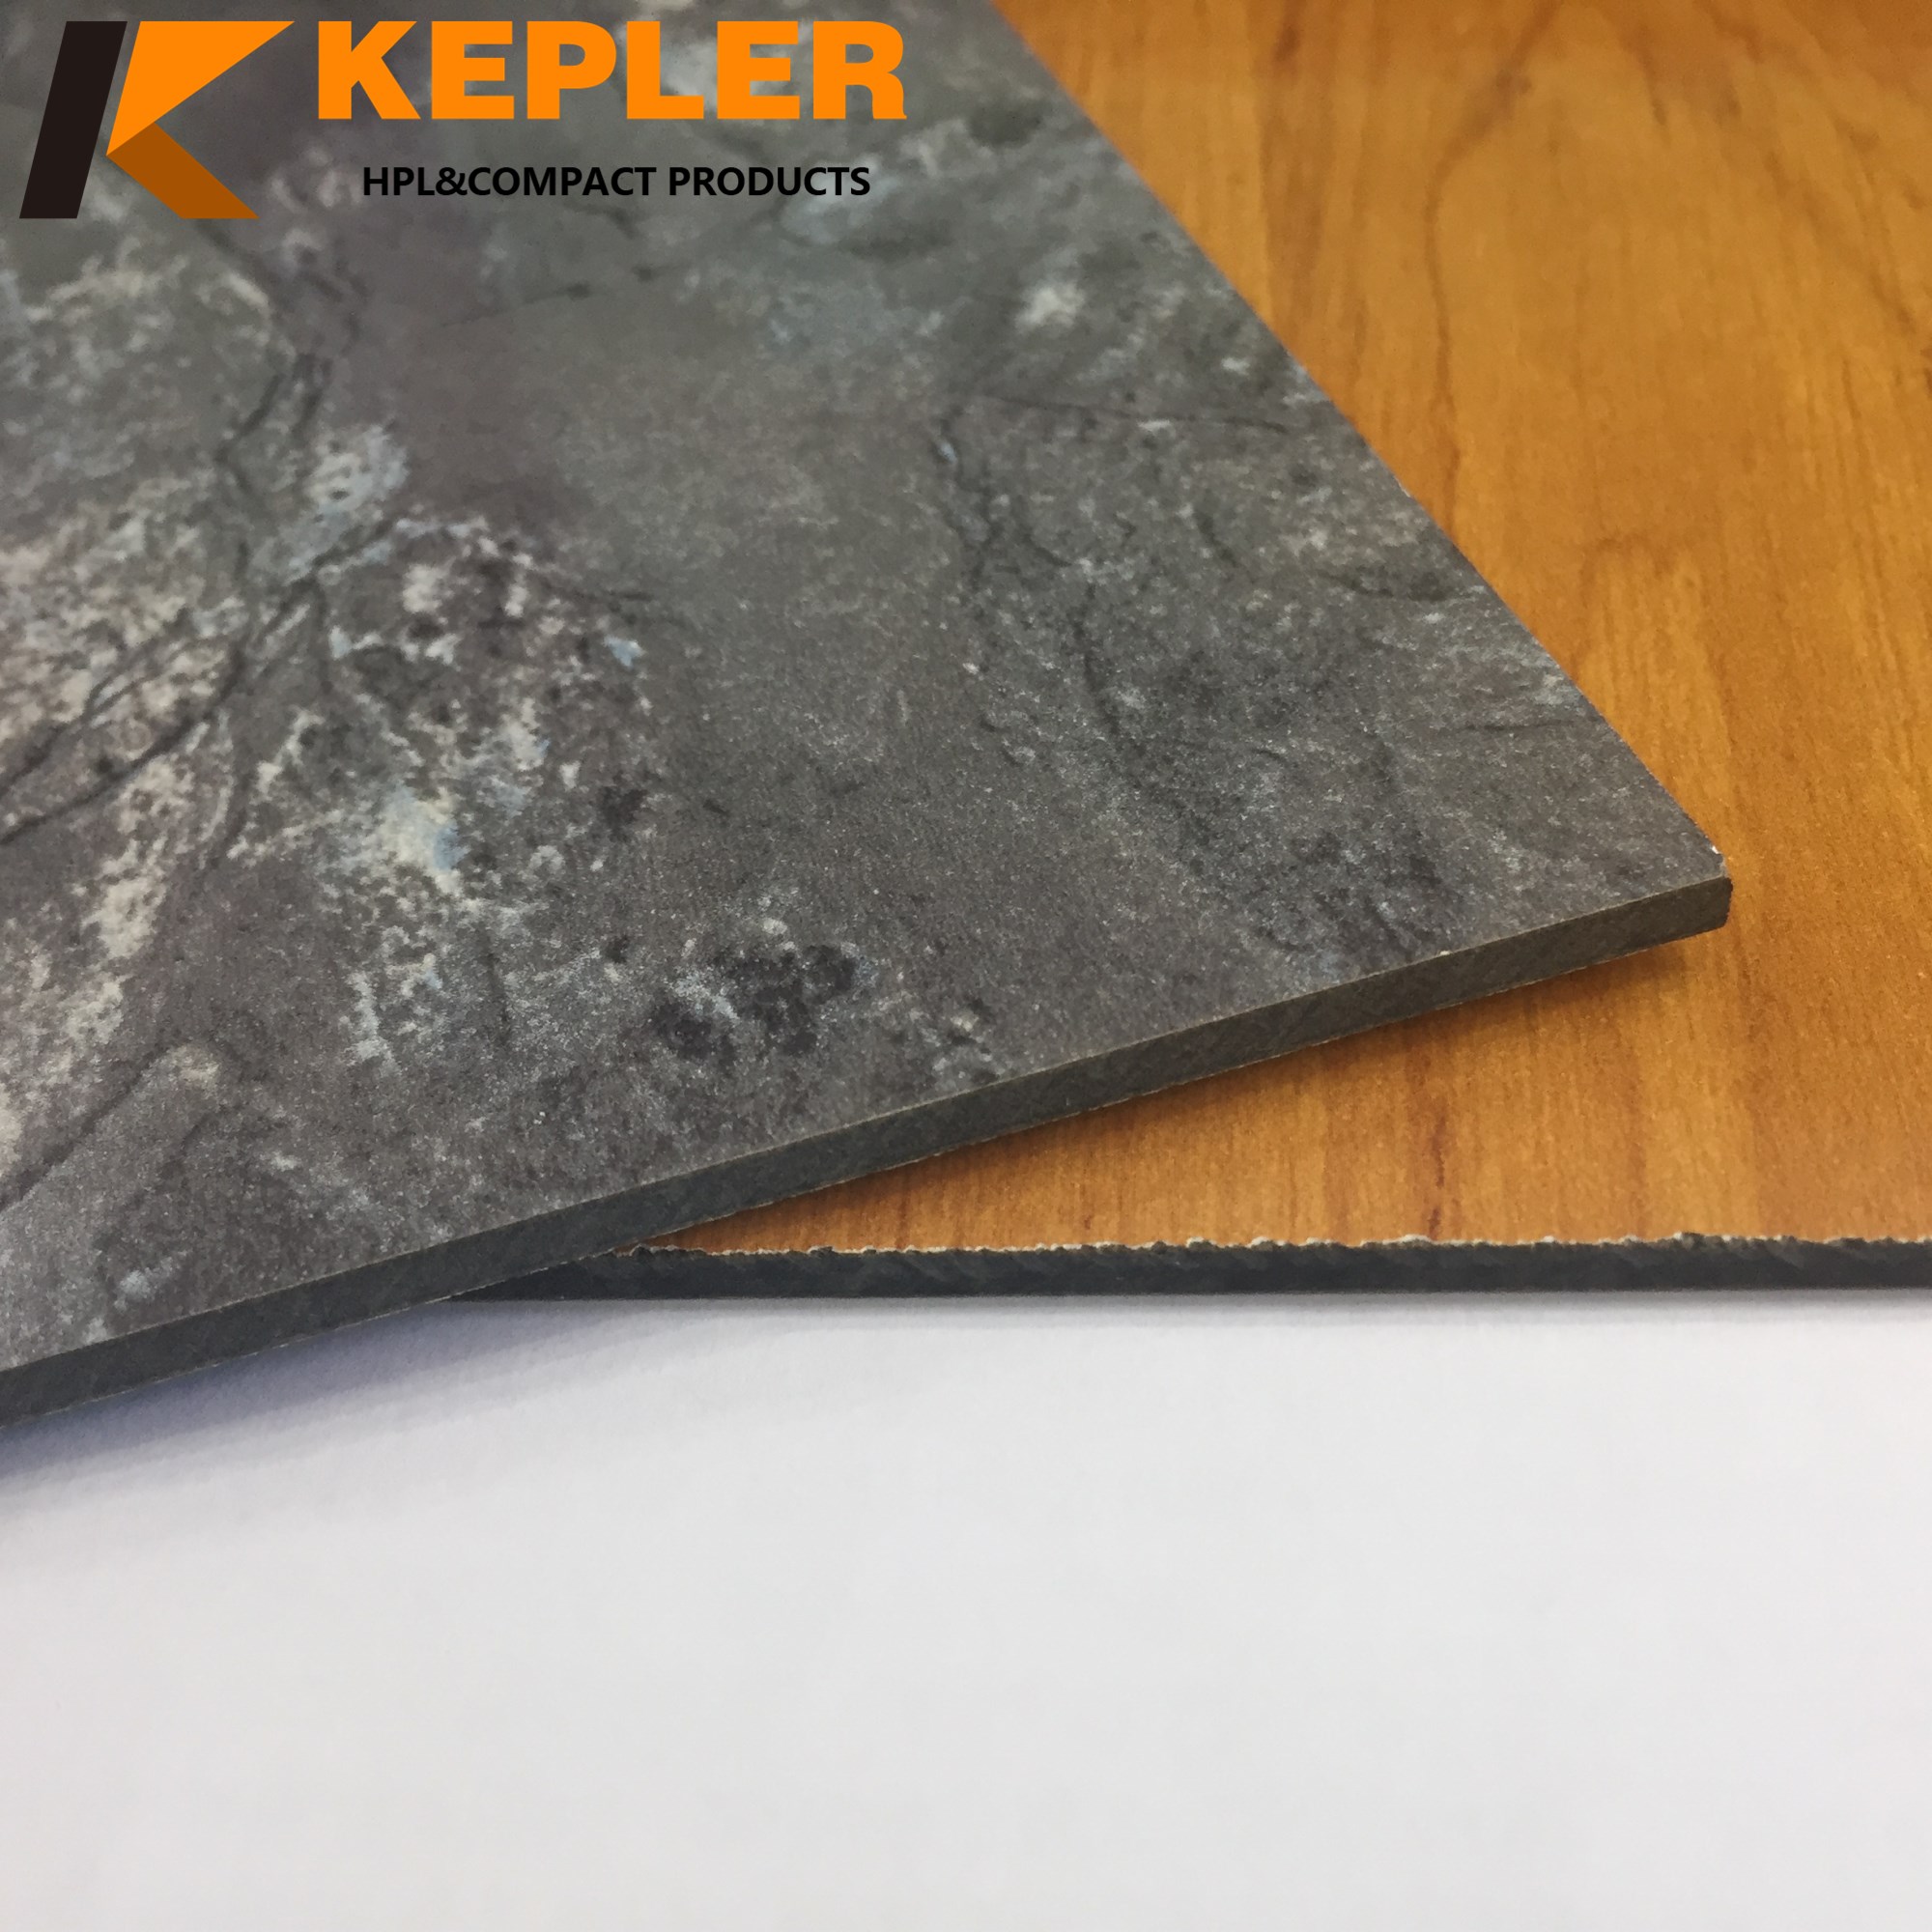 Kepler decorative waterproof fireproof heat resistant double finish 2 faces color hpl compact phenolic laminate board